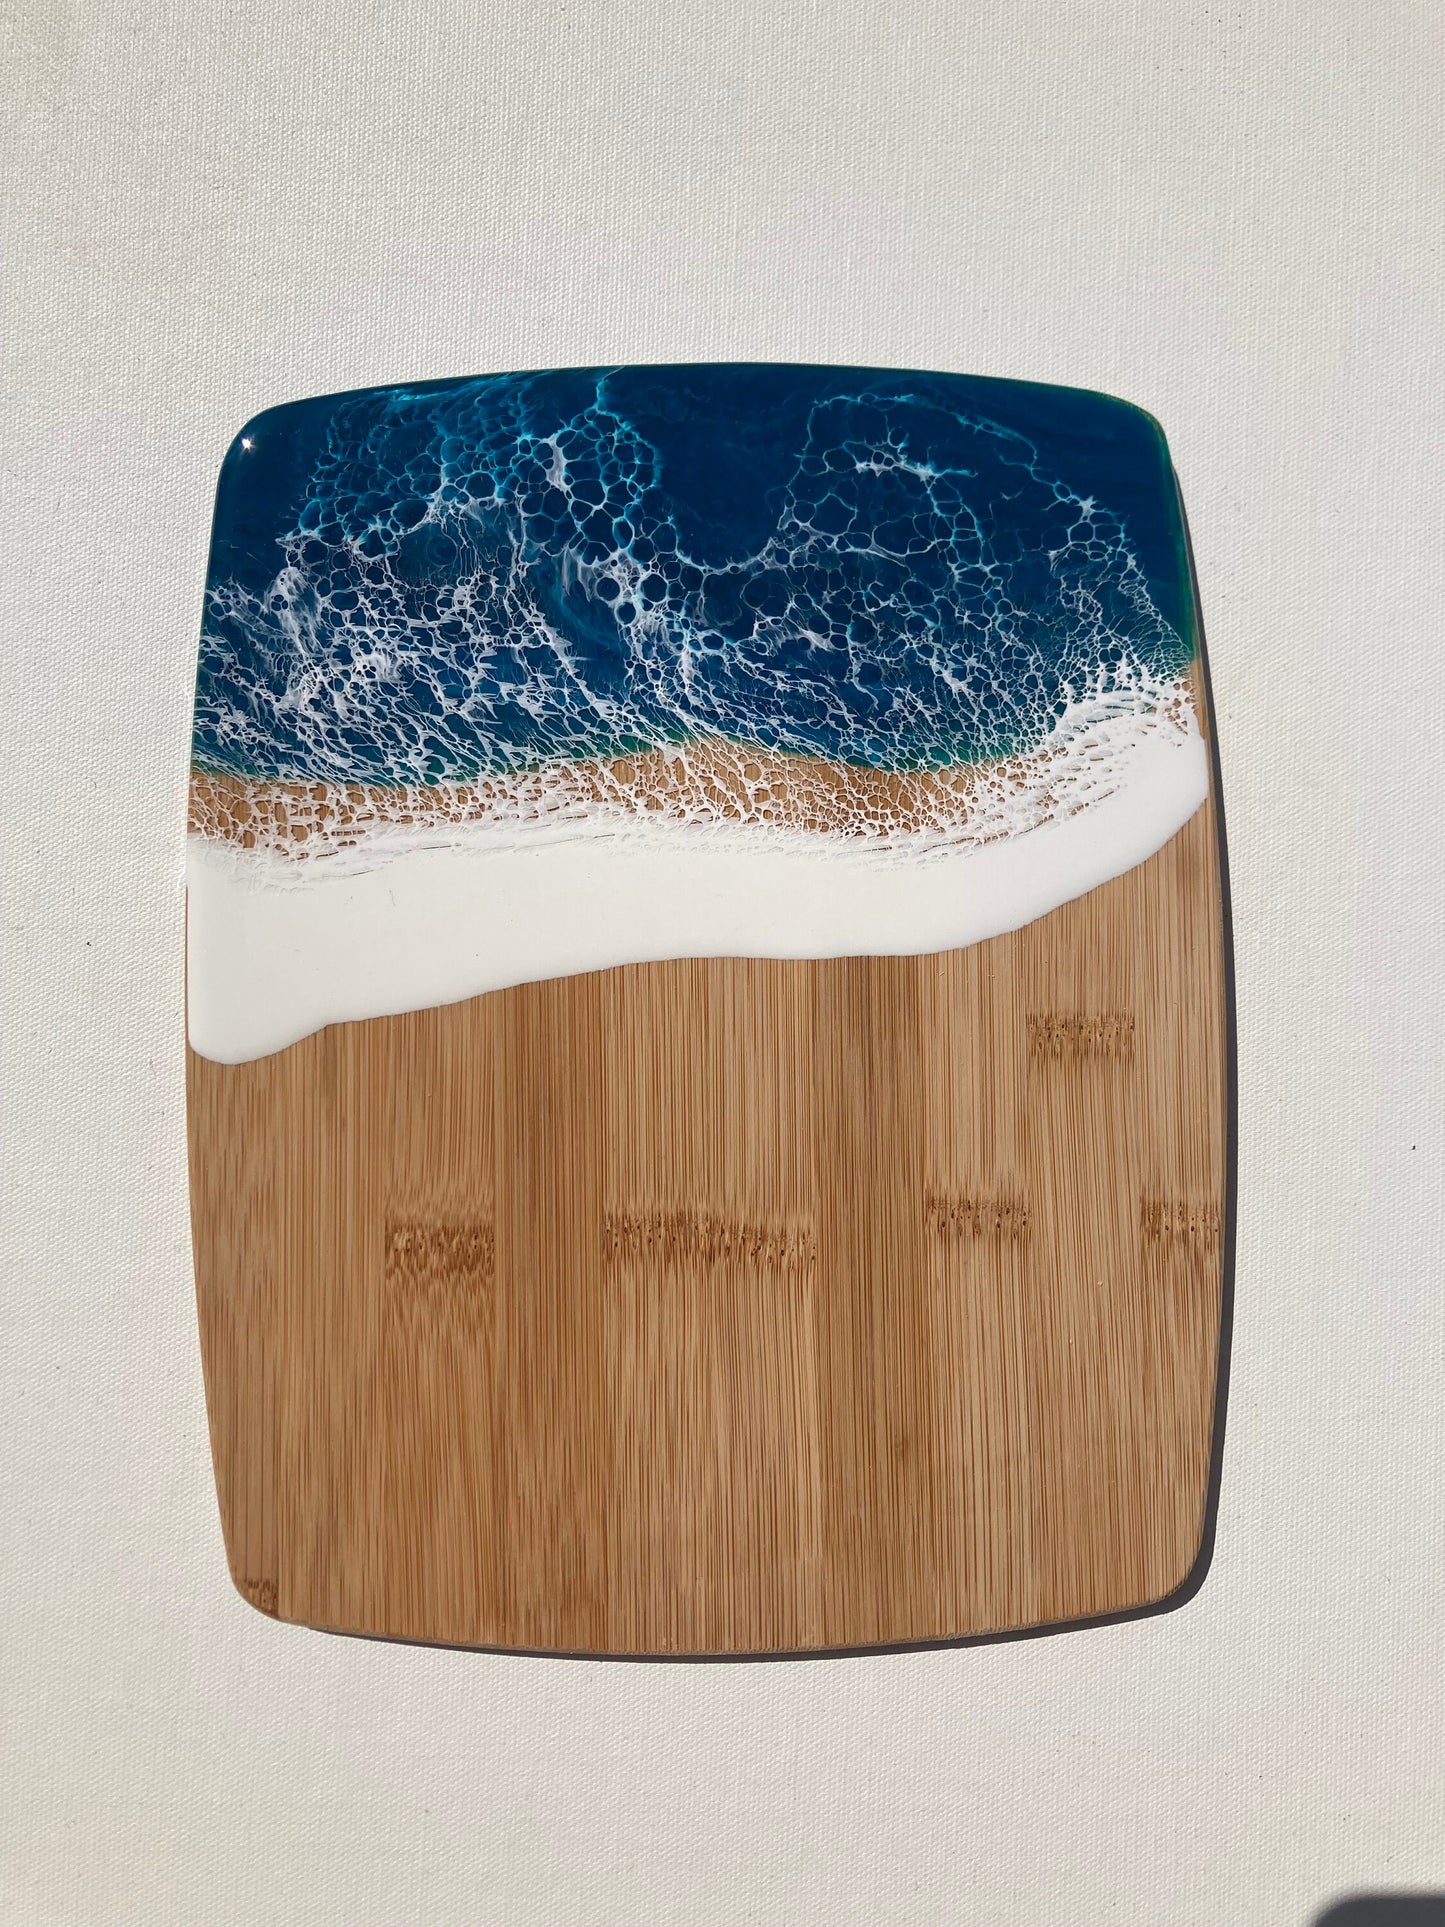 ocean wave bamboo cutting board set of 3